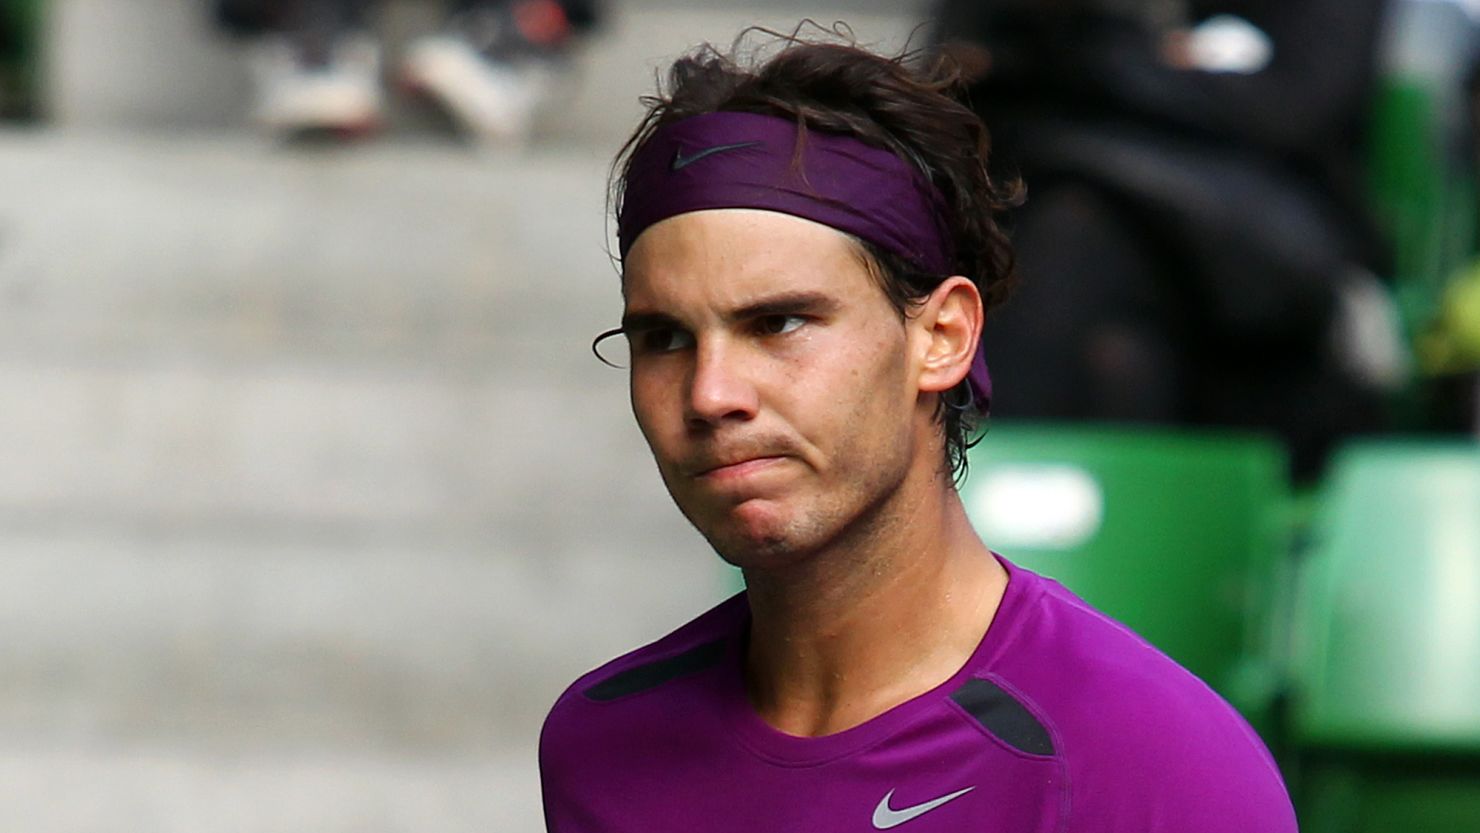 Spanish tennis star Rafael Nadal defeated Mardy Fish of the U.S. in Tokyo on Saturday.